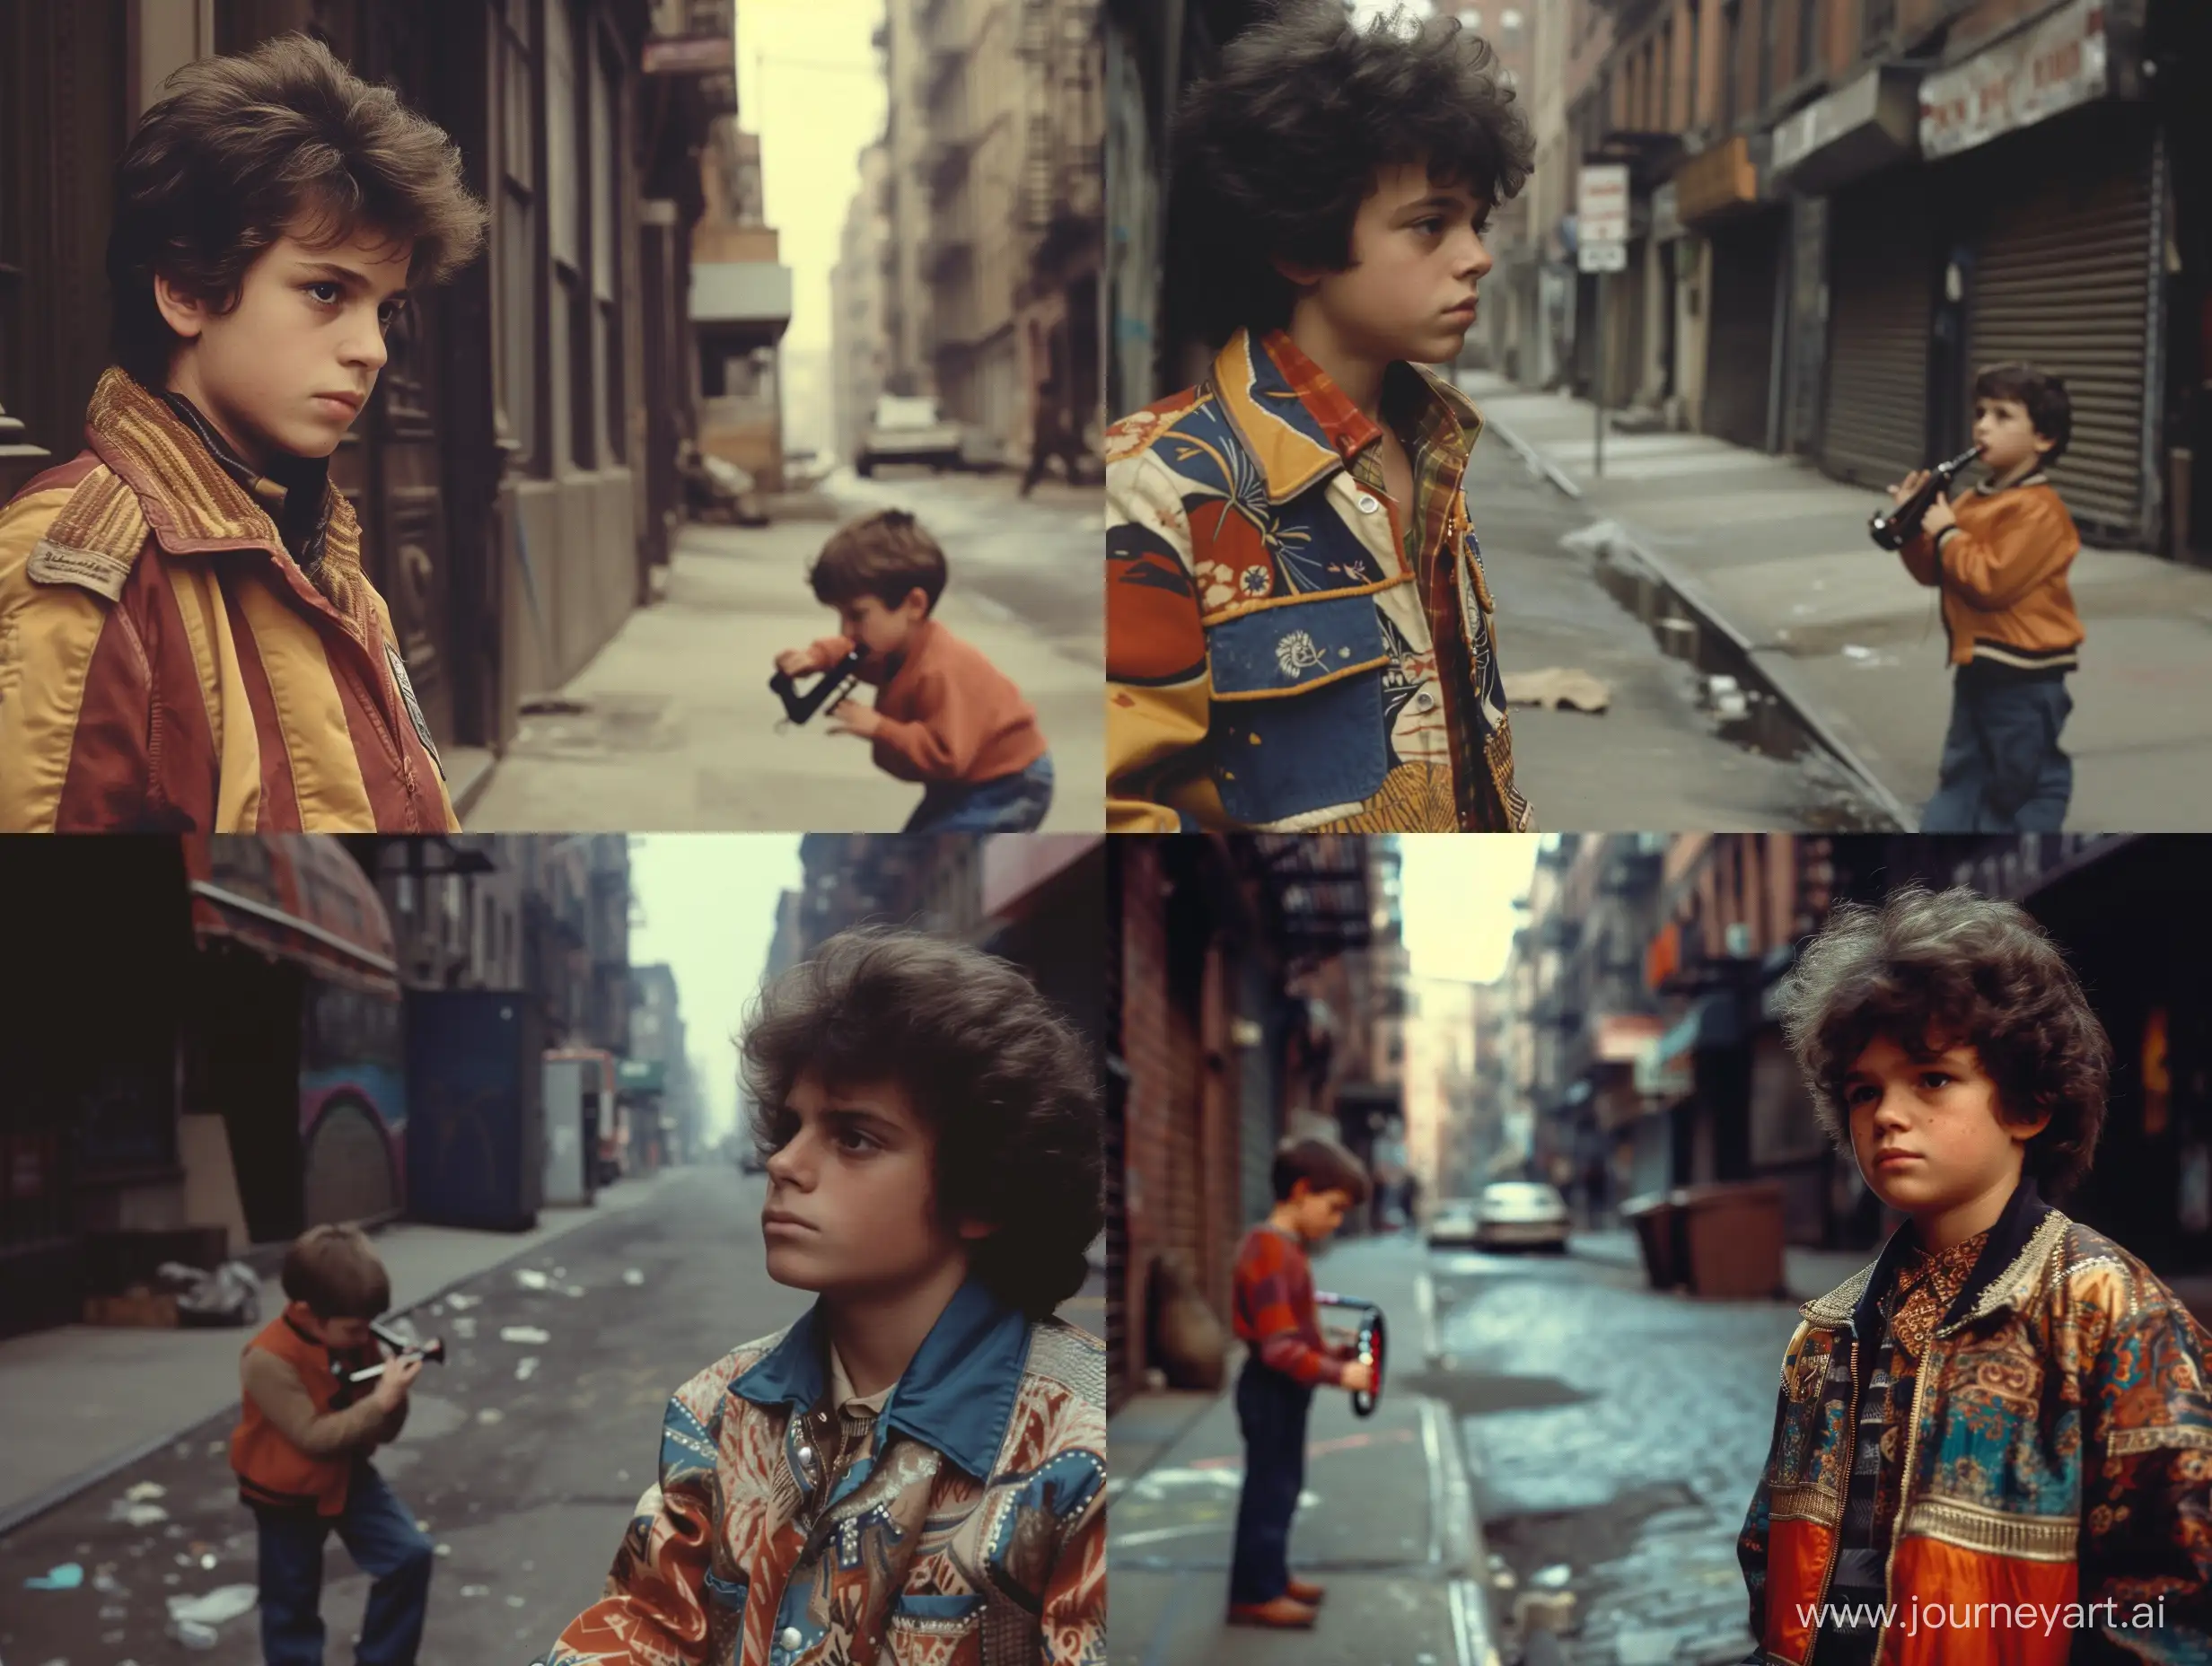 Melancholic-New-York-Street-Young-Billy-Joel-Watches-Boy-Playing-Harmonica